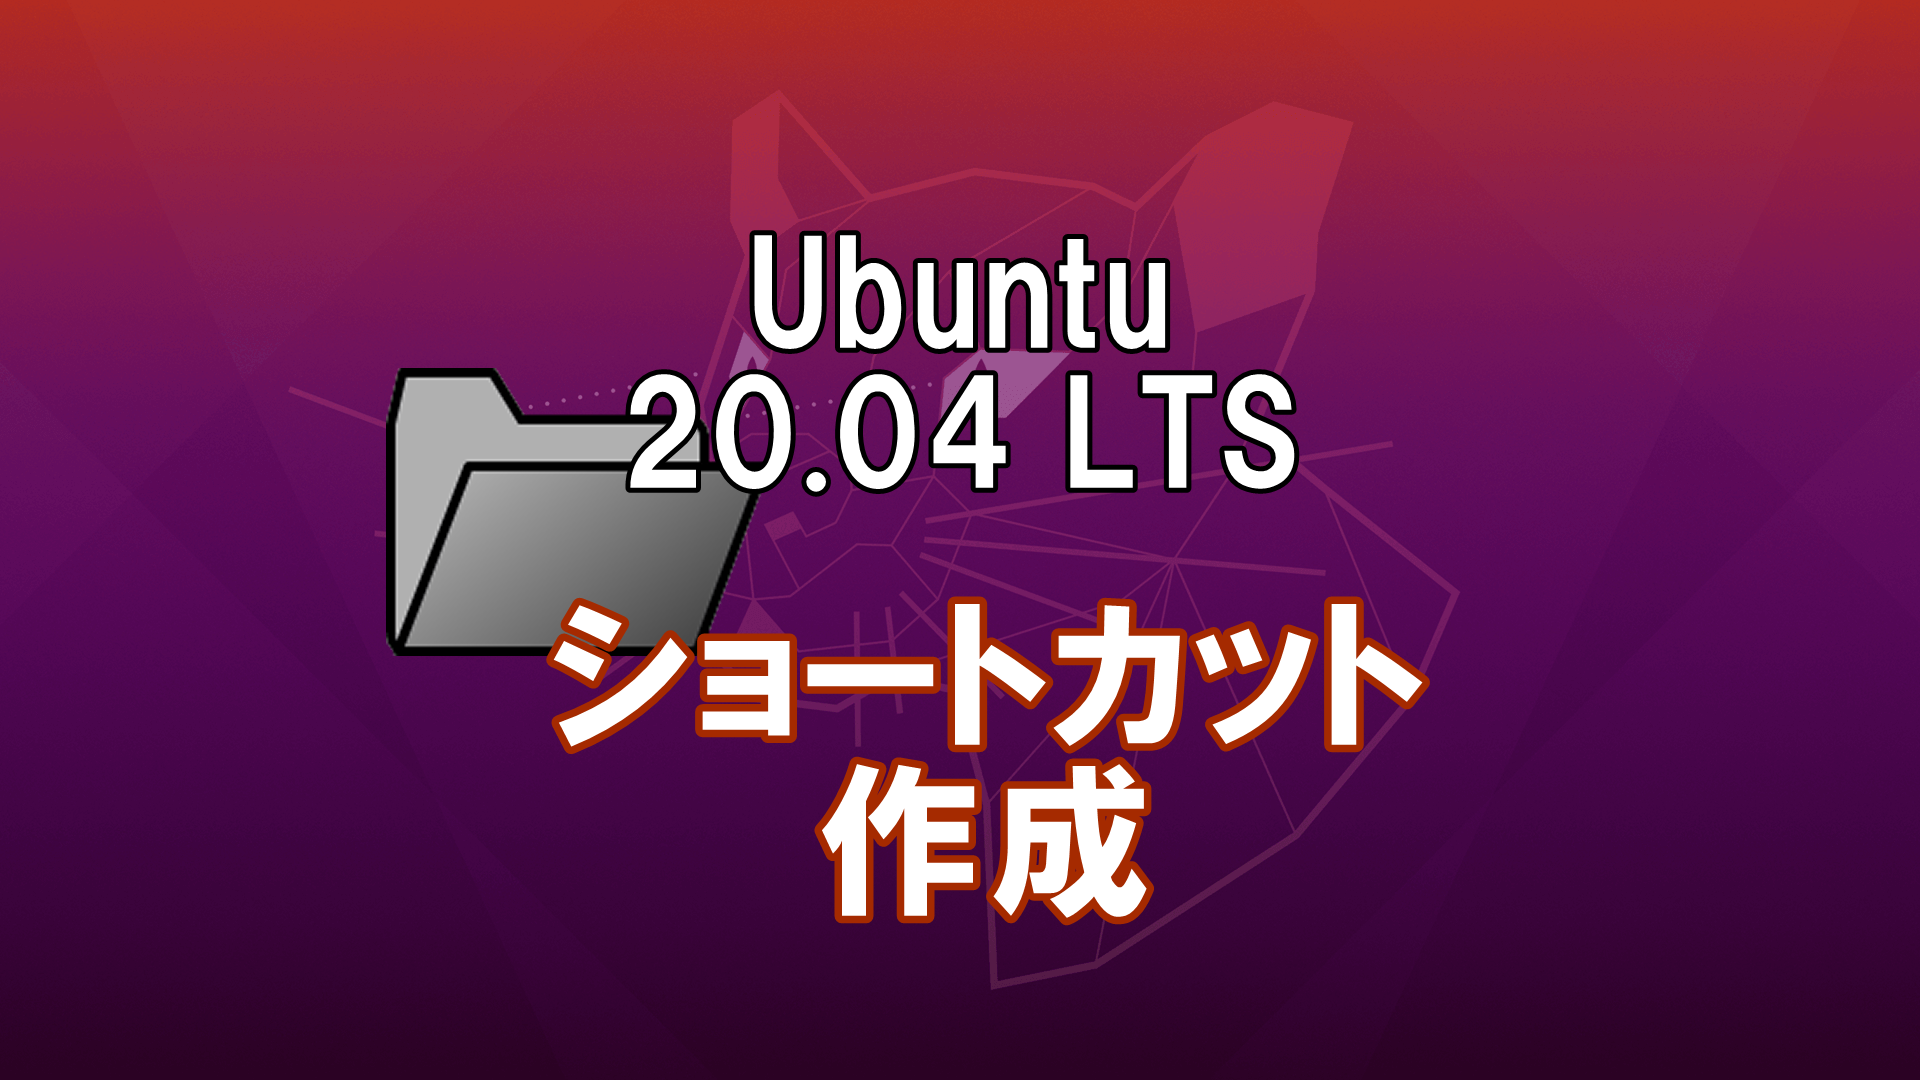 Ubuntu20.04 LTS ショートカット、Desktop Entryの作成方法